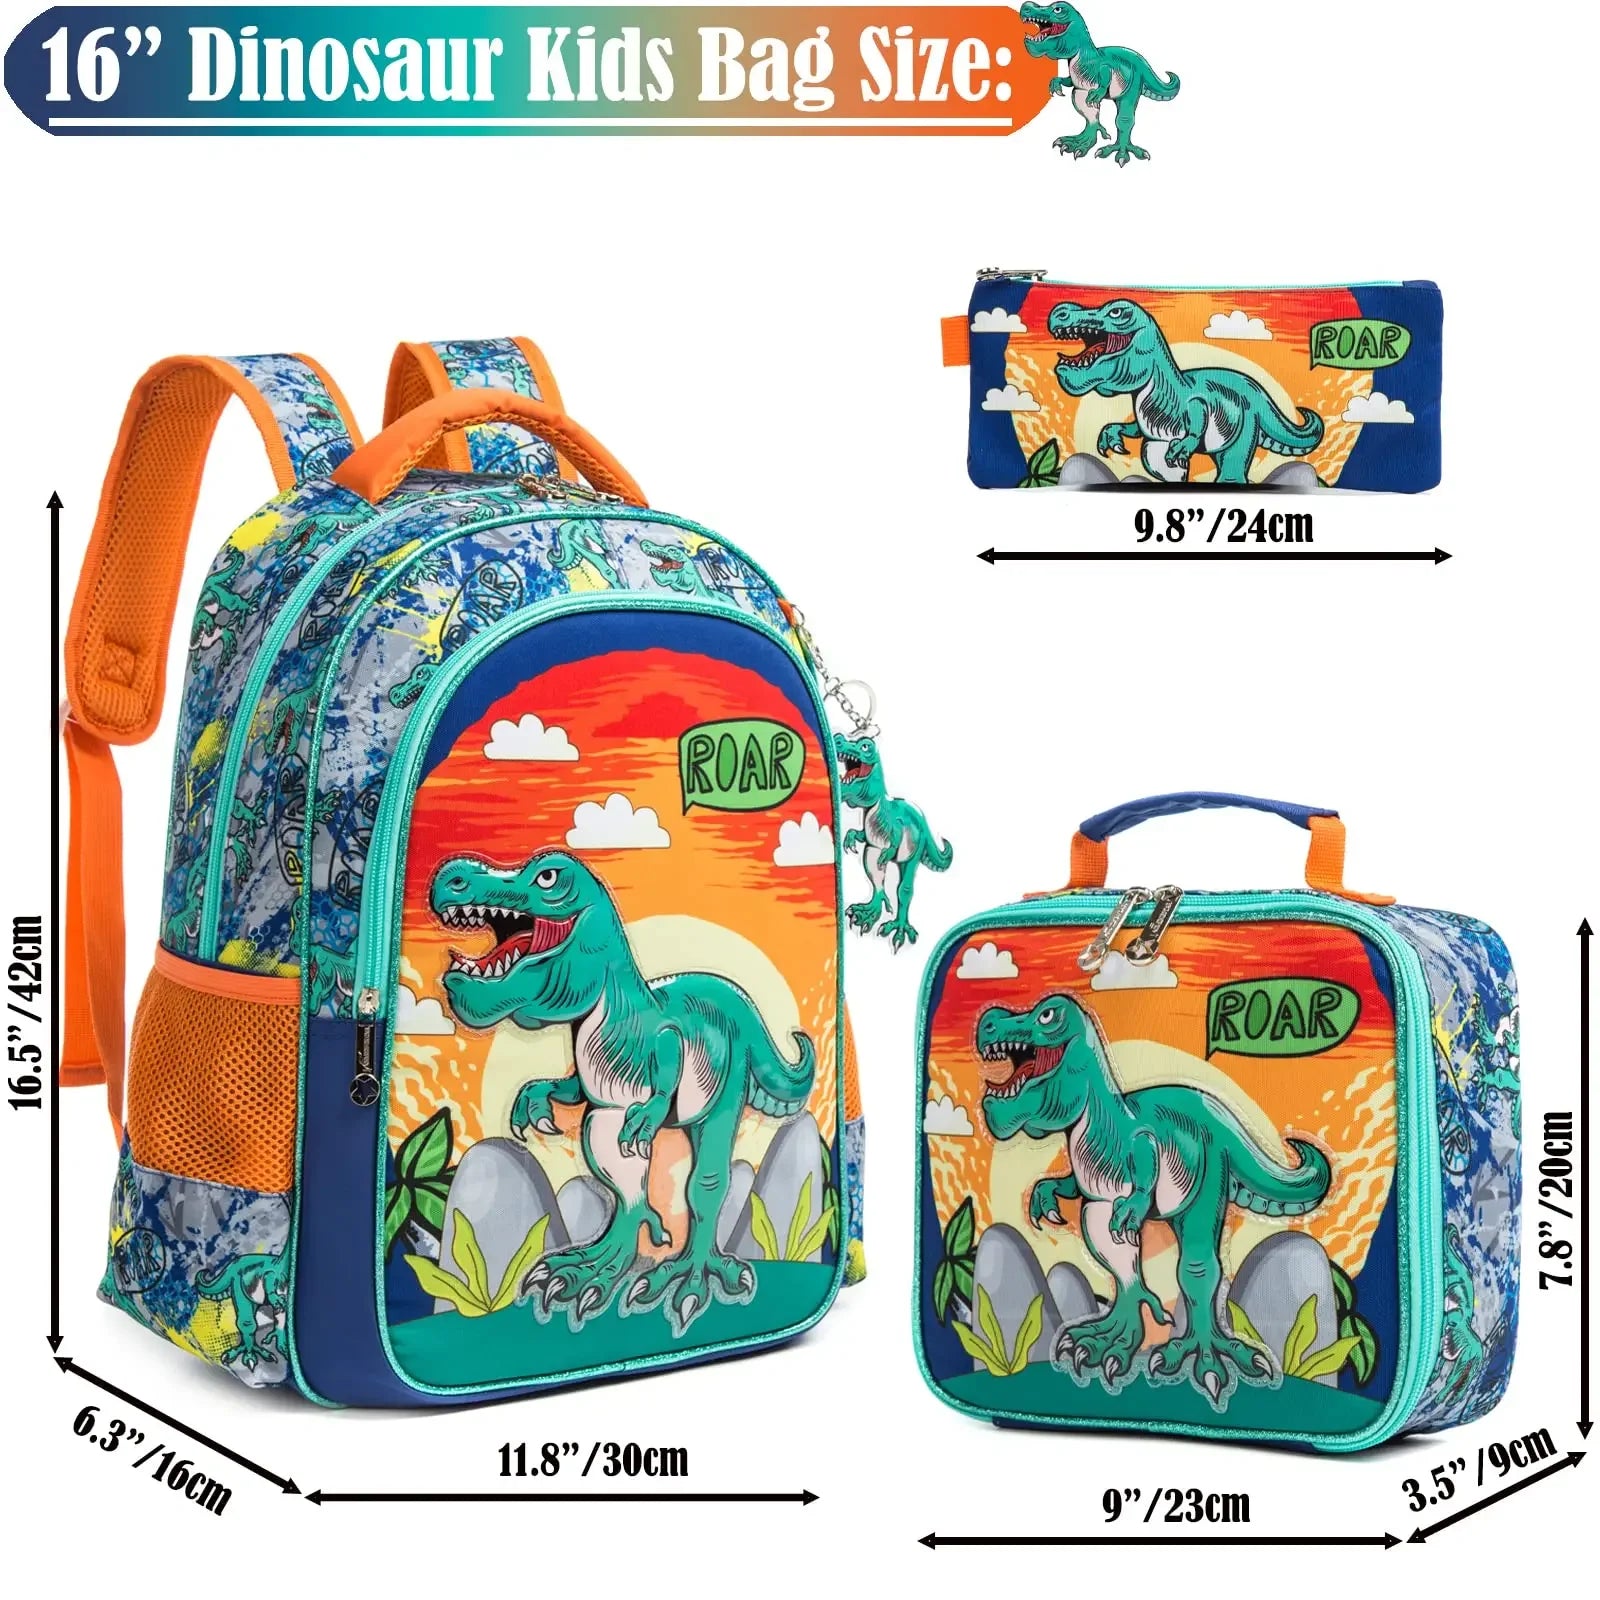 Roaring Adventures Dinosaur Backpack Set for Kids